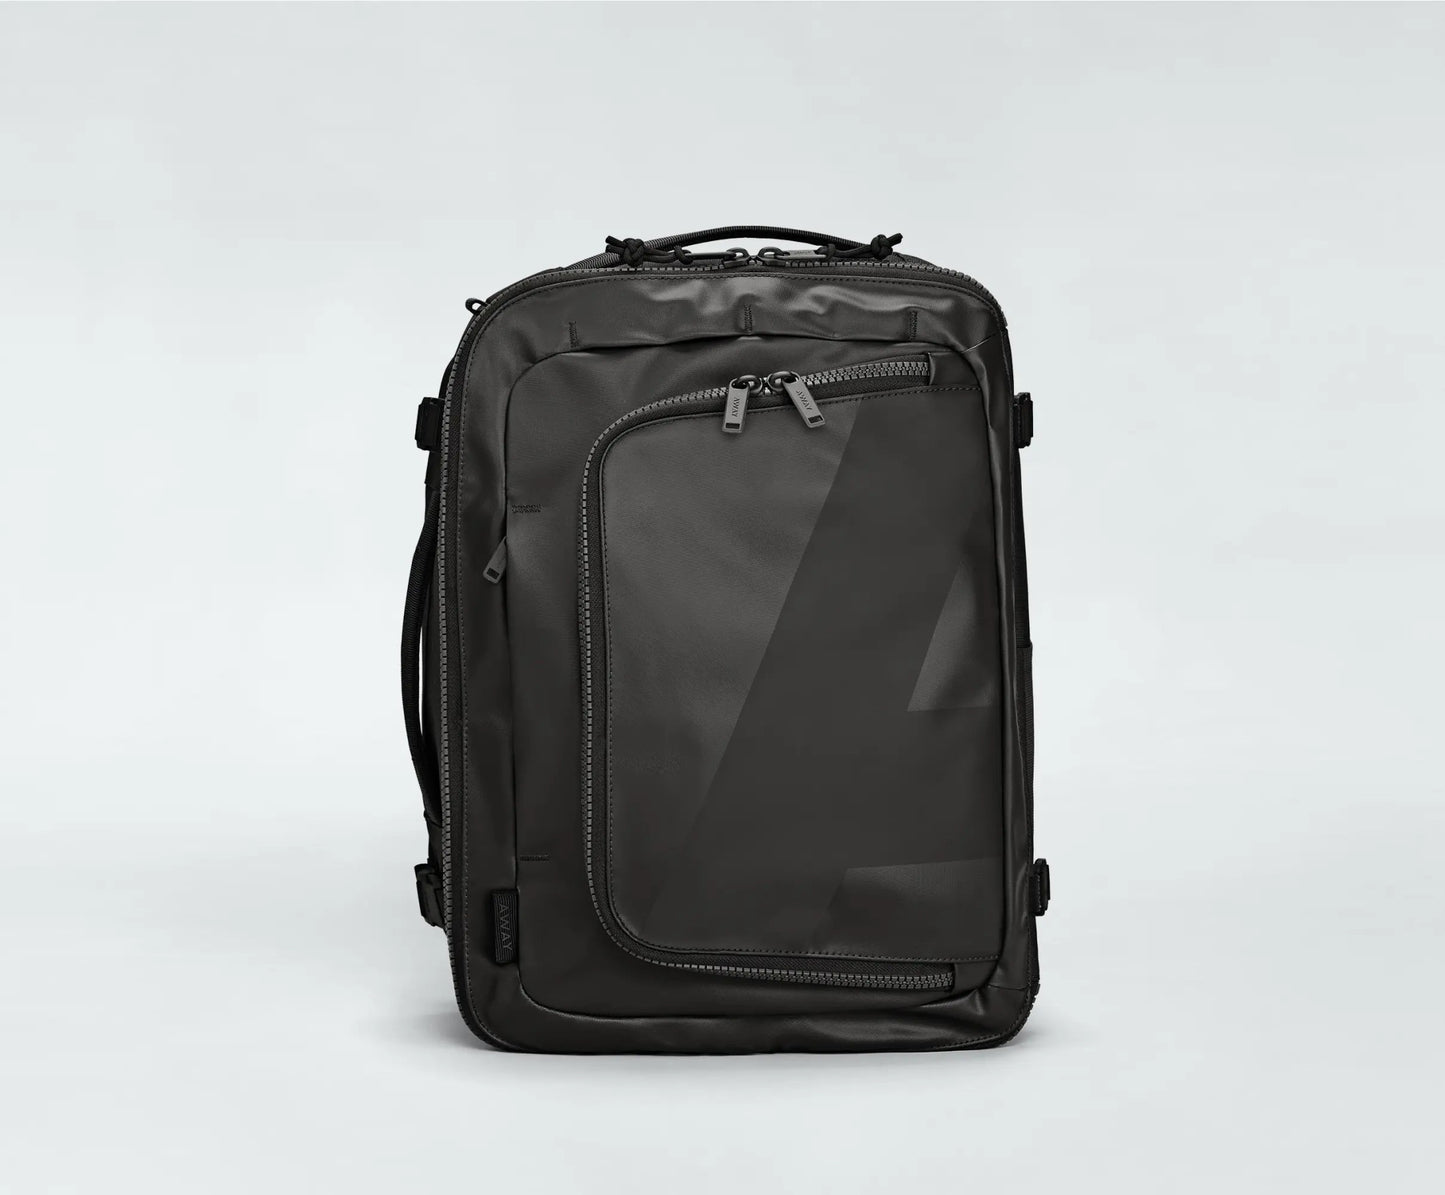 F.A.R Convertible Backpack 25L - HAPIVERI